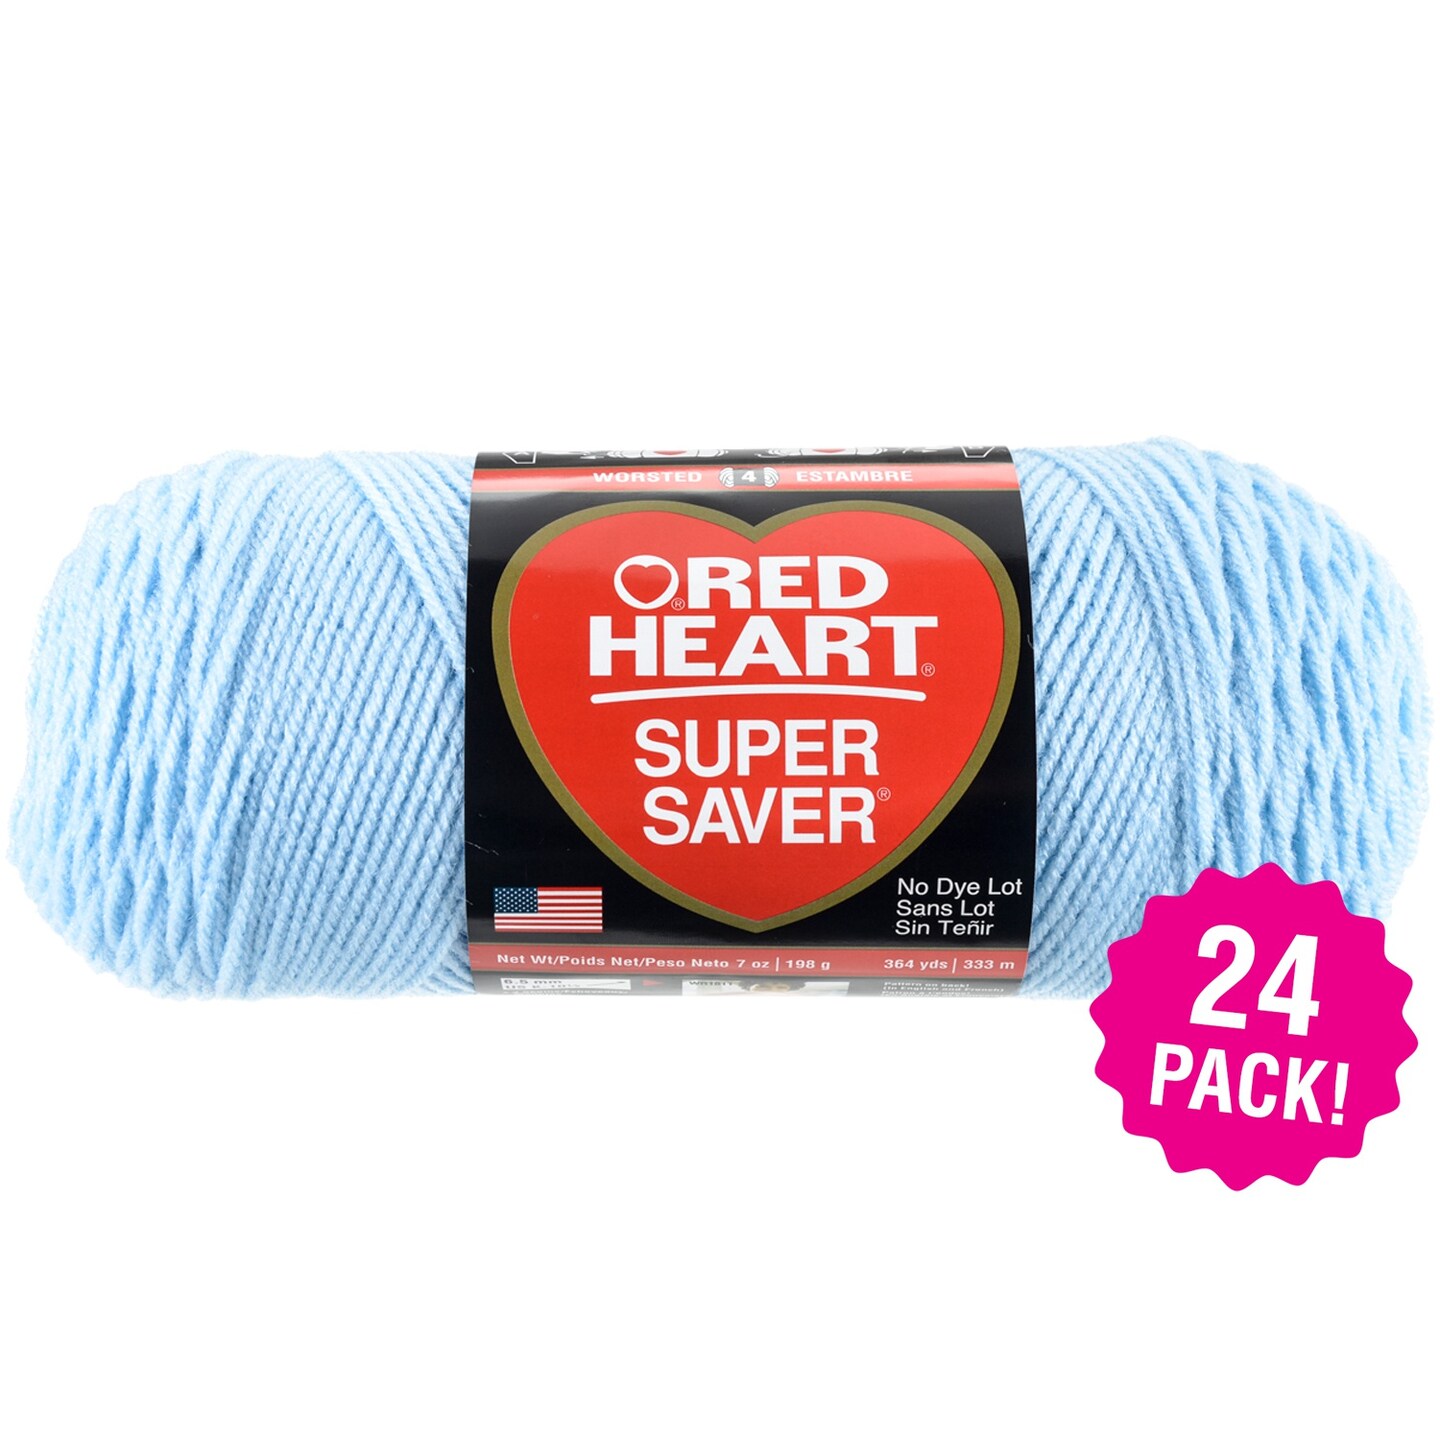 Multipack of 24 - Red Heart Super Saver Yarn-Light Blue